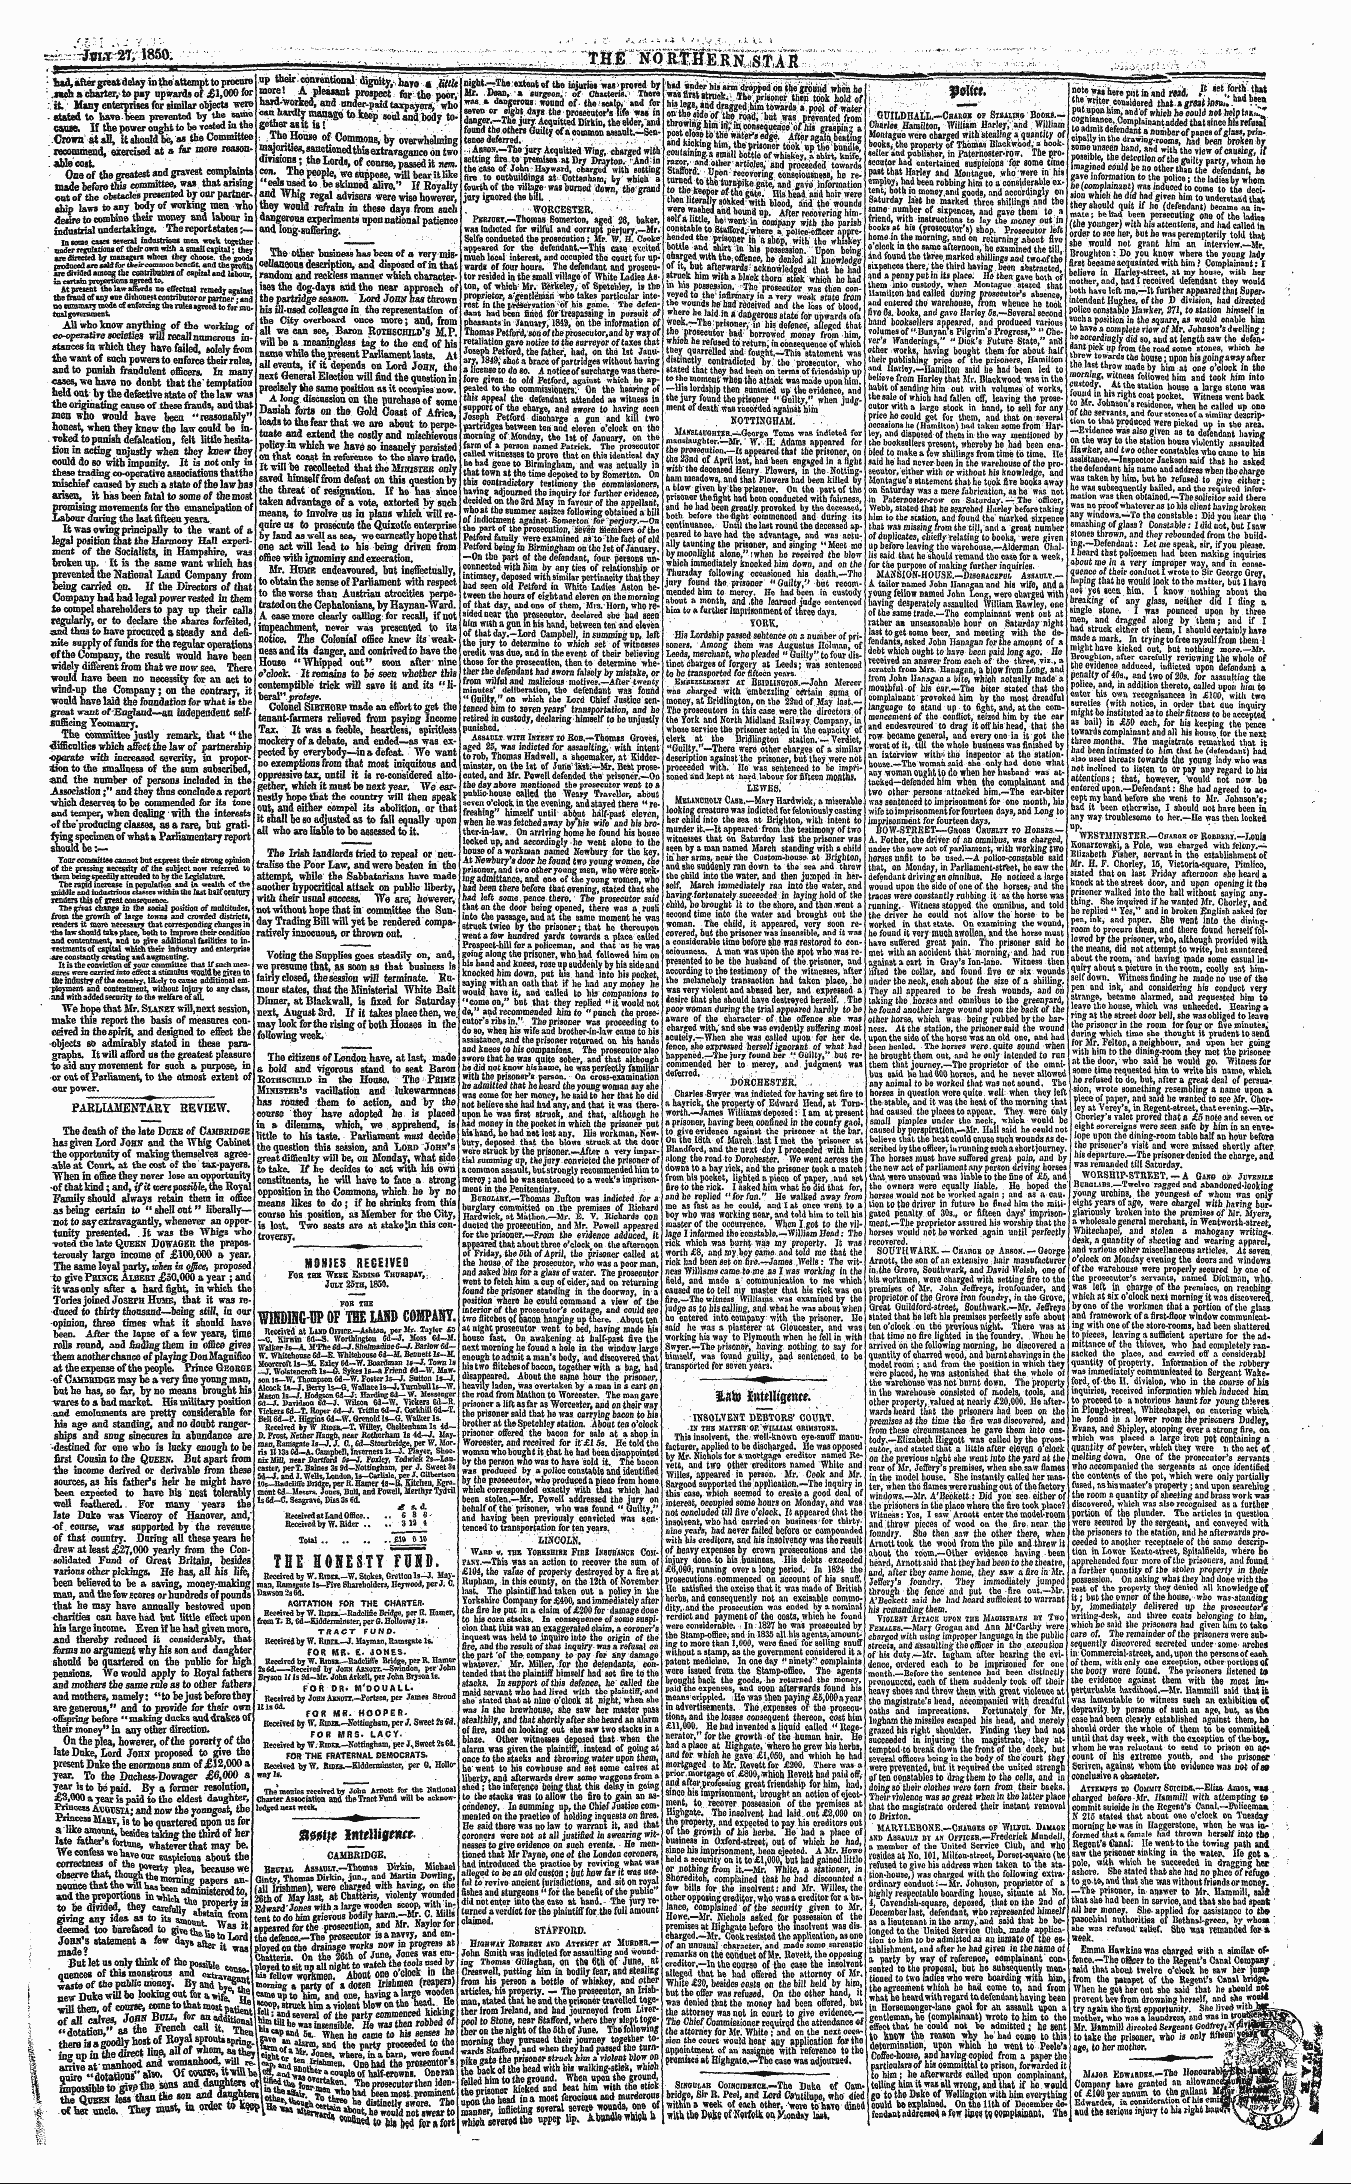 Northern Star (1837-1852): jS F Y, 3rd edition - Major Edwabdbs.- The Honoursfc#§Ffe||I J...